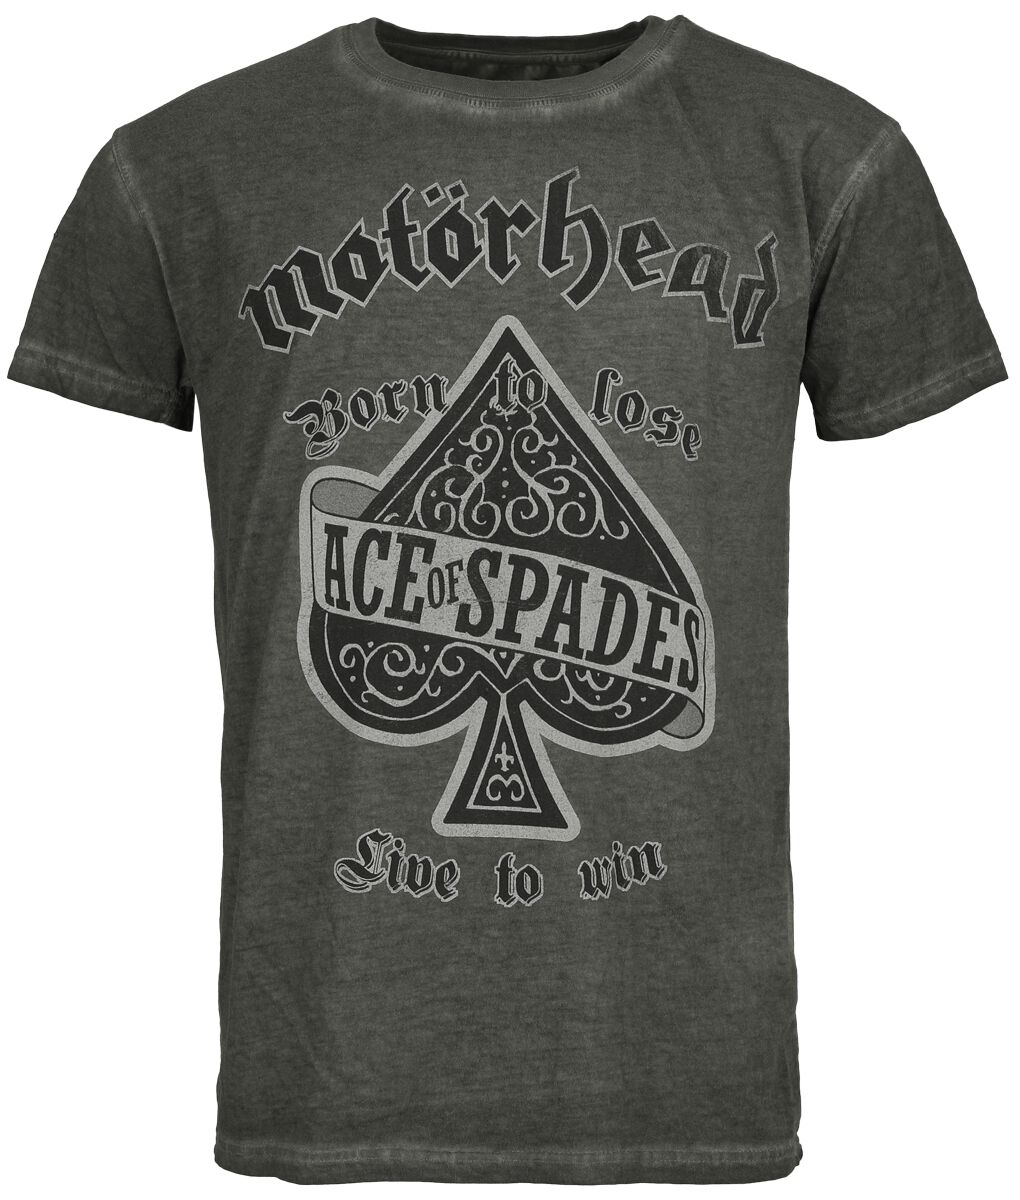 Motörhead Ace Of Spades T-Shirt anthrazit in M